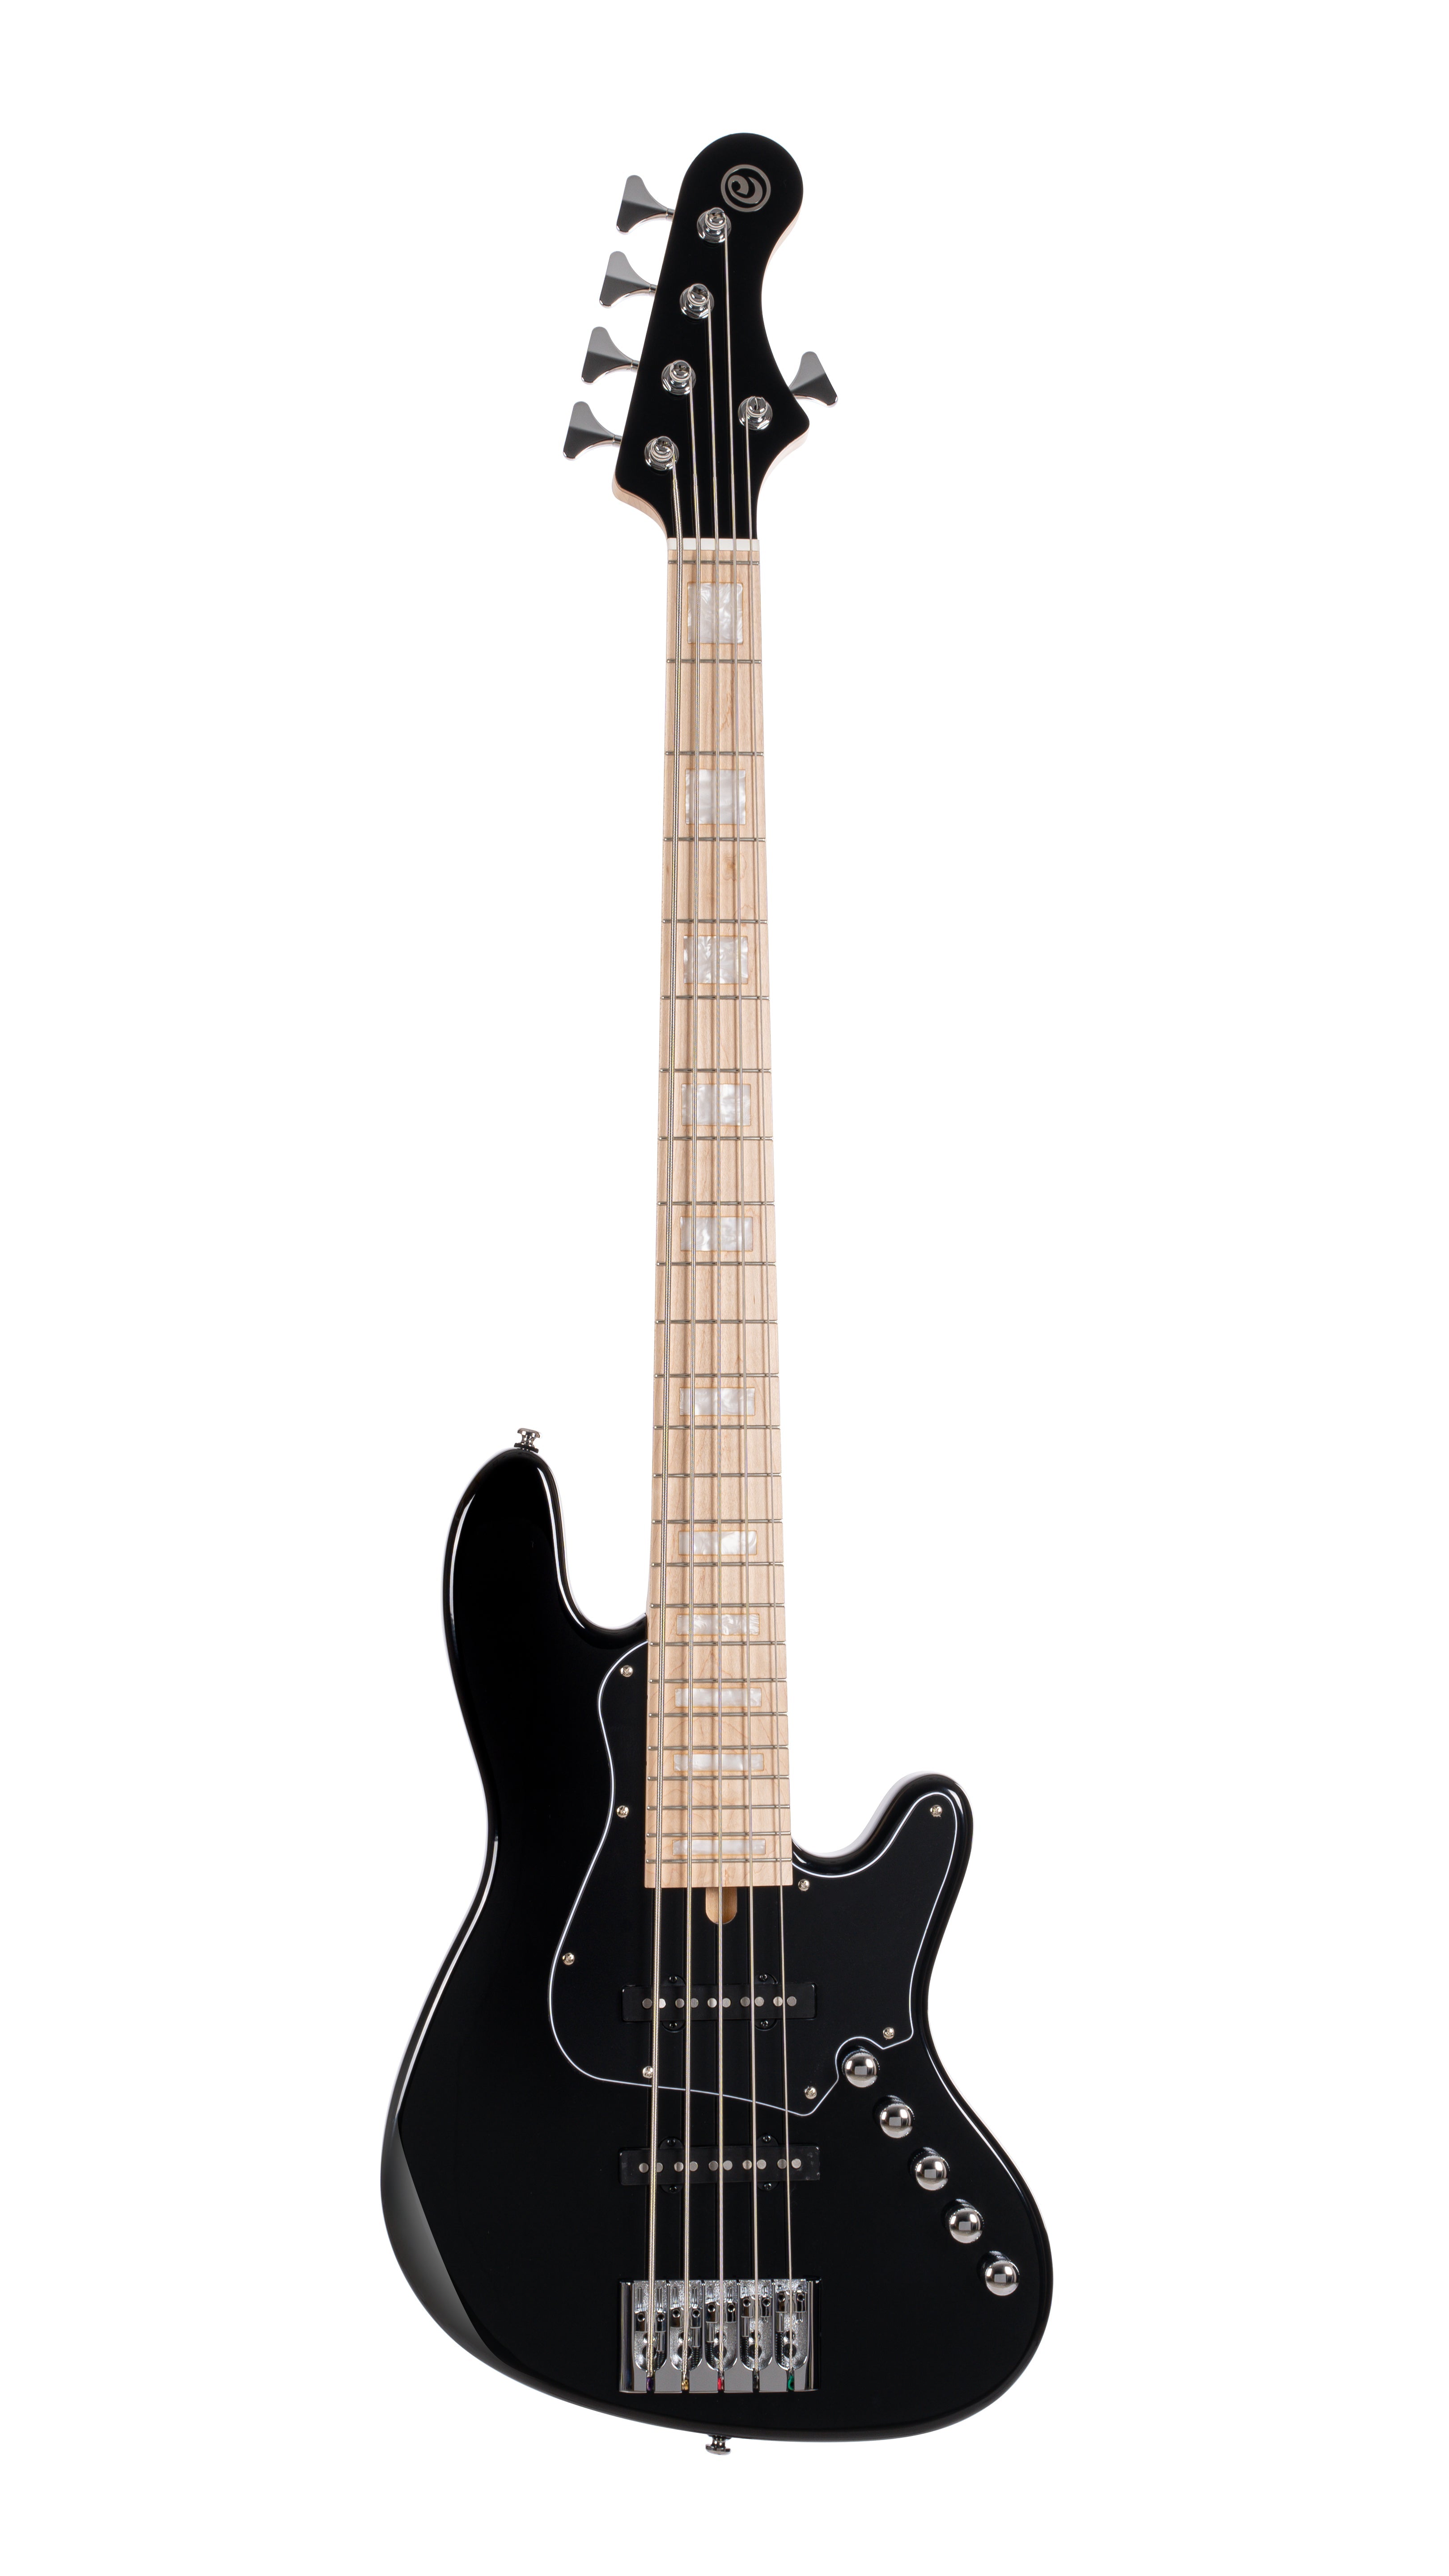 Cort NJS-5 BK w/Case, Bass Guitar for sale at Richards Guitars.